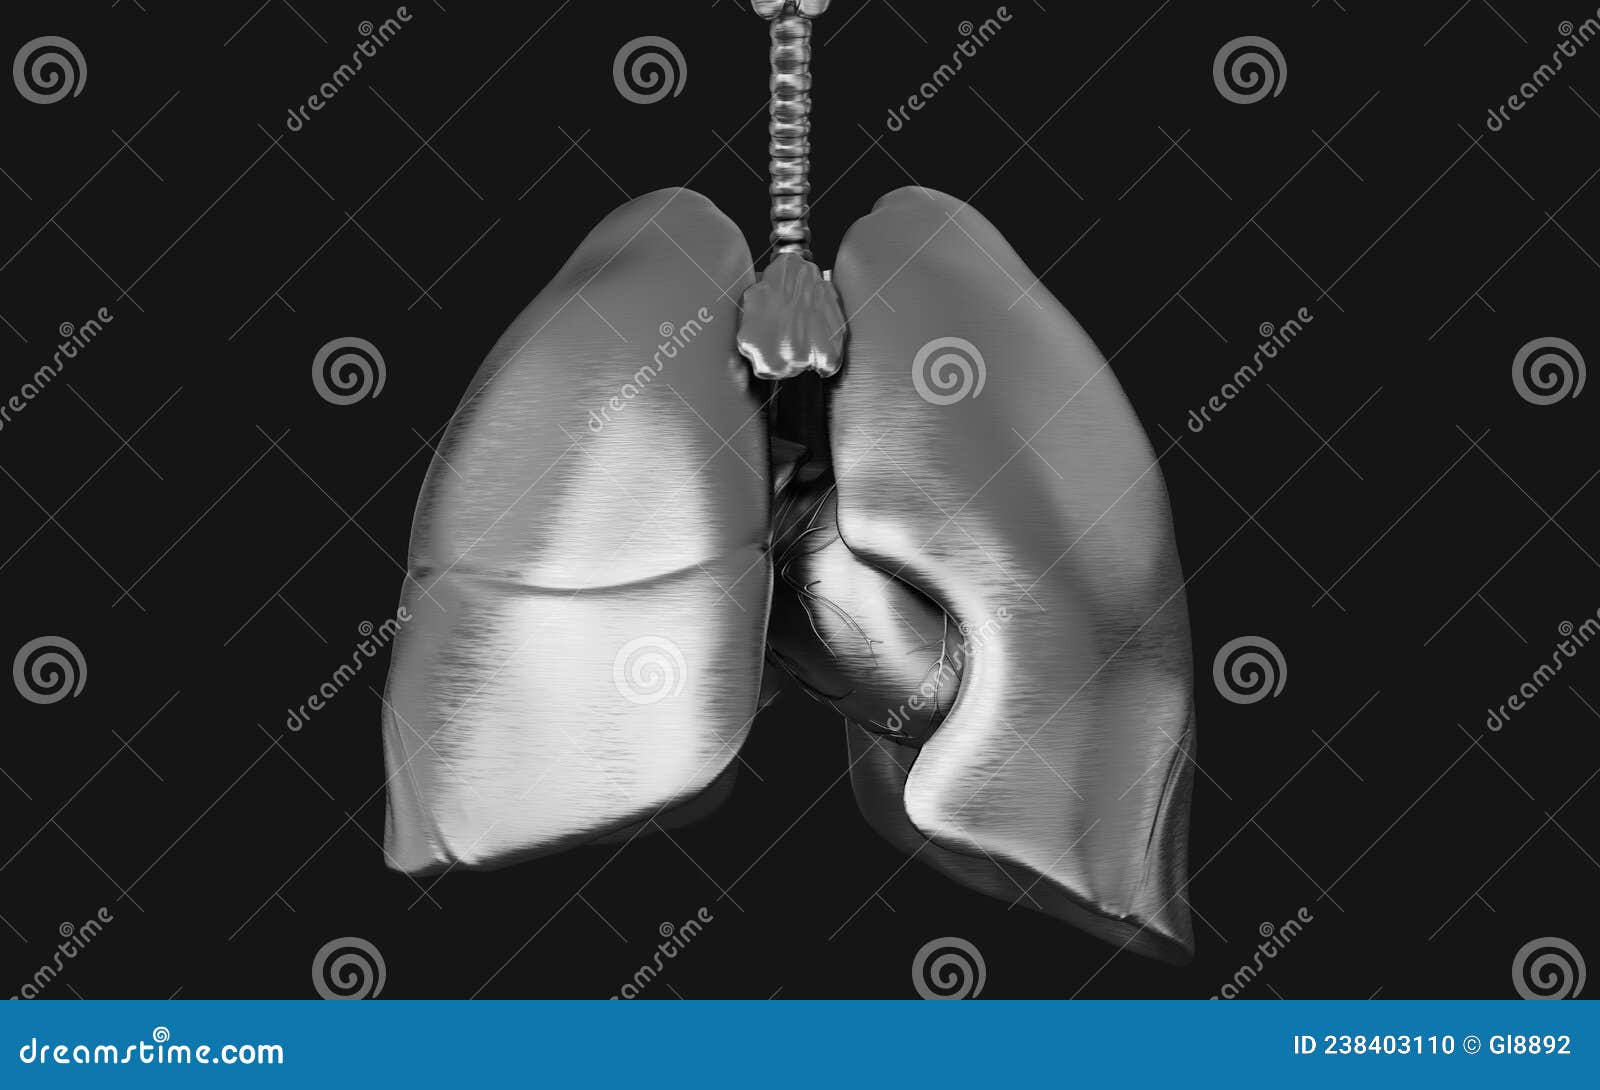 the humanÃ¢â¬â¢s lung iron and respiratory system